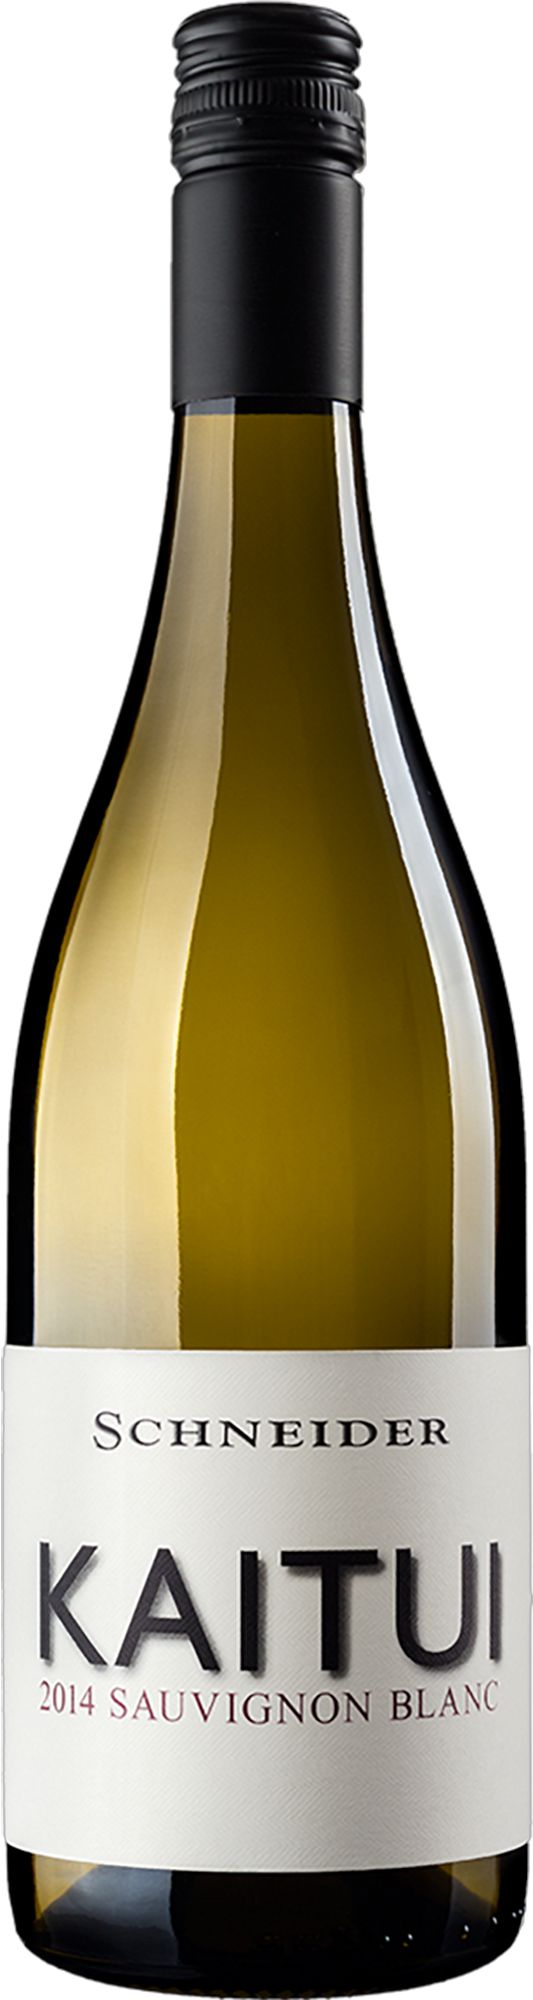 2020 KAITUI Sauvignon blanc Qualitätswein 0.75l